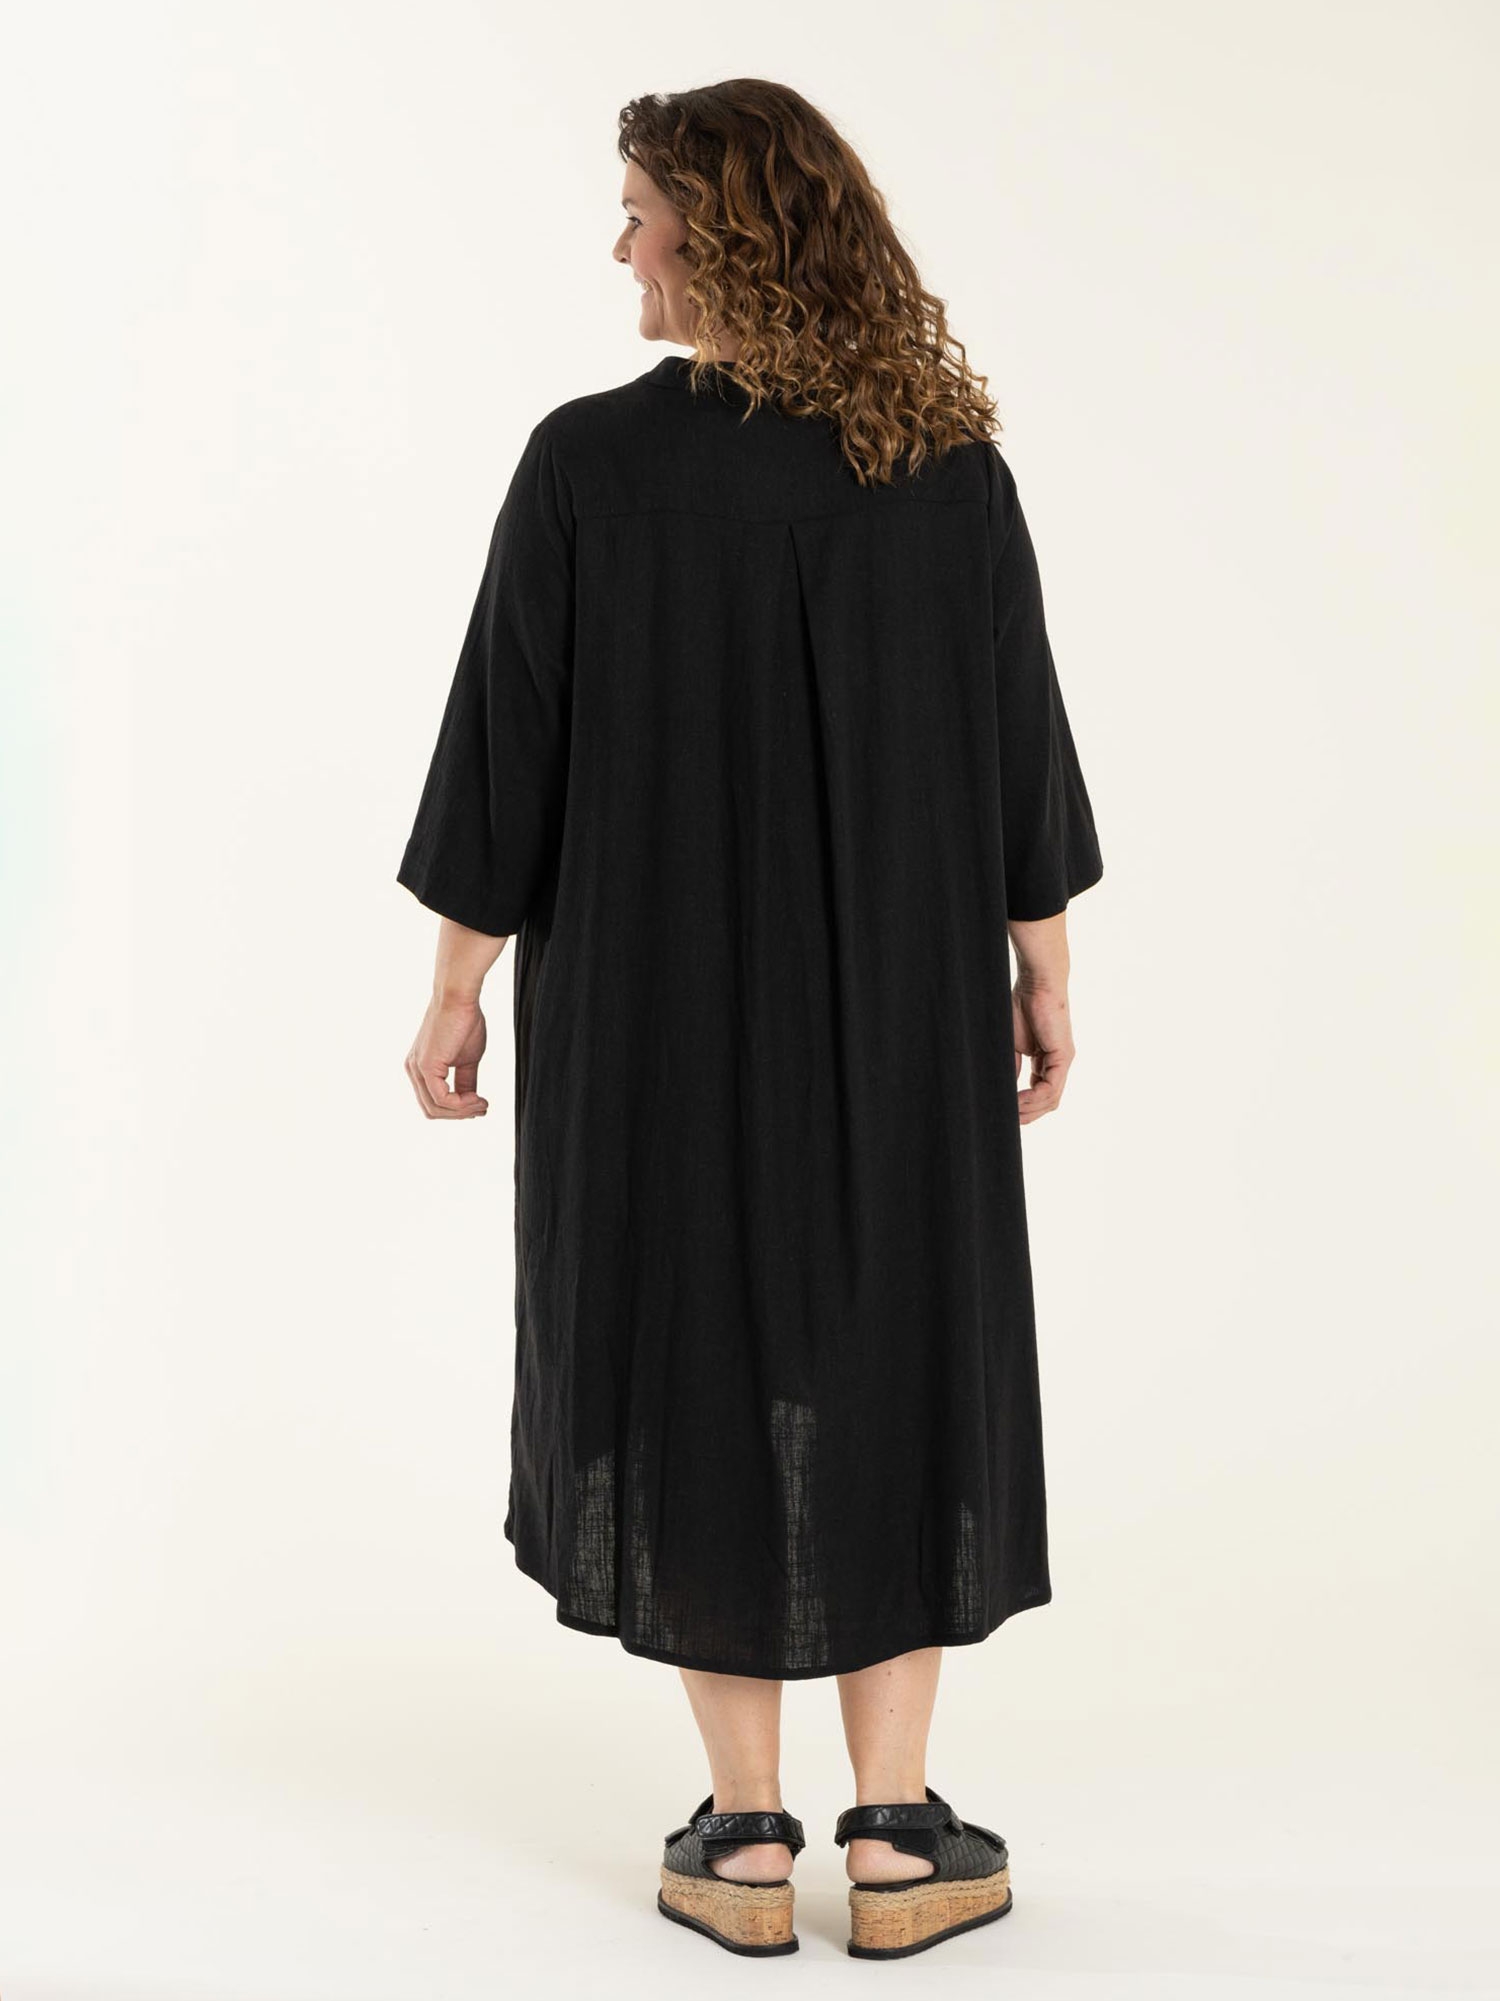 LENETTE - Svart klänning med V-ringning i exklusiv viskos och linne fra Gozzip